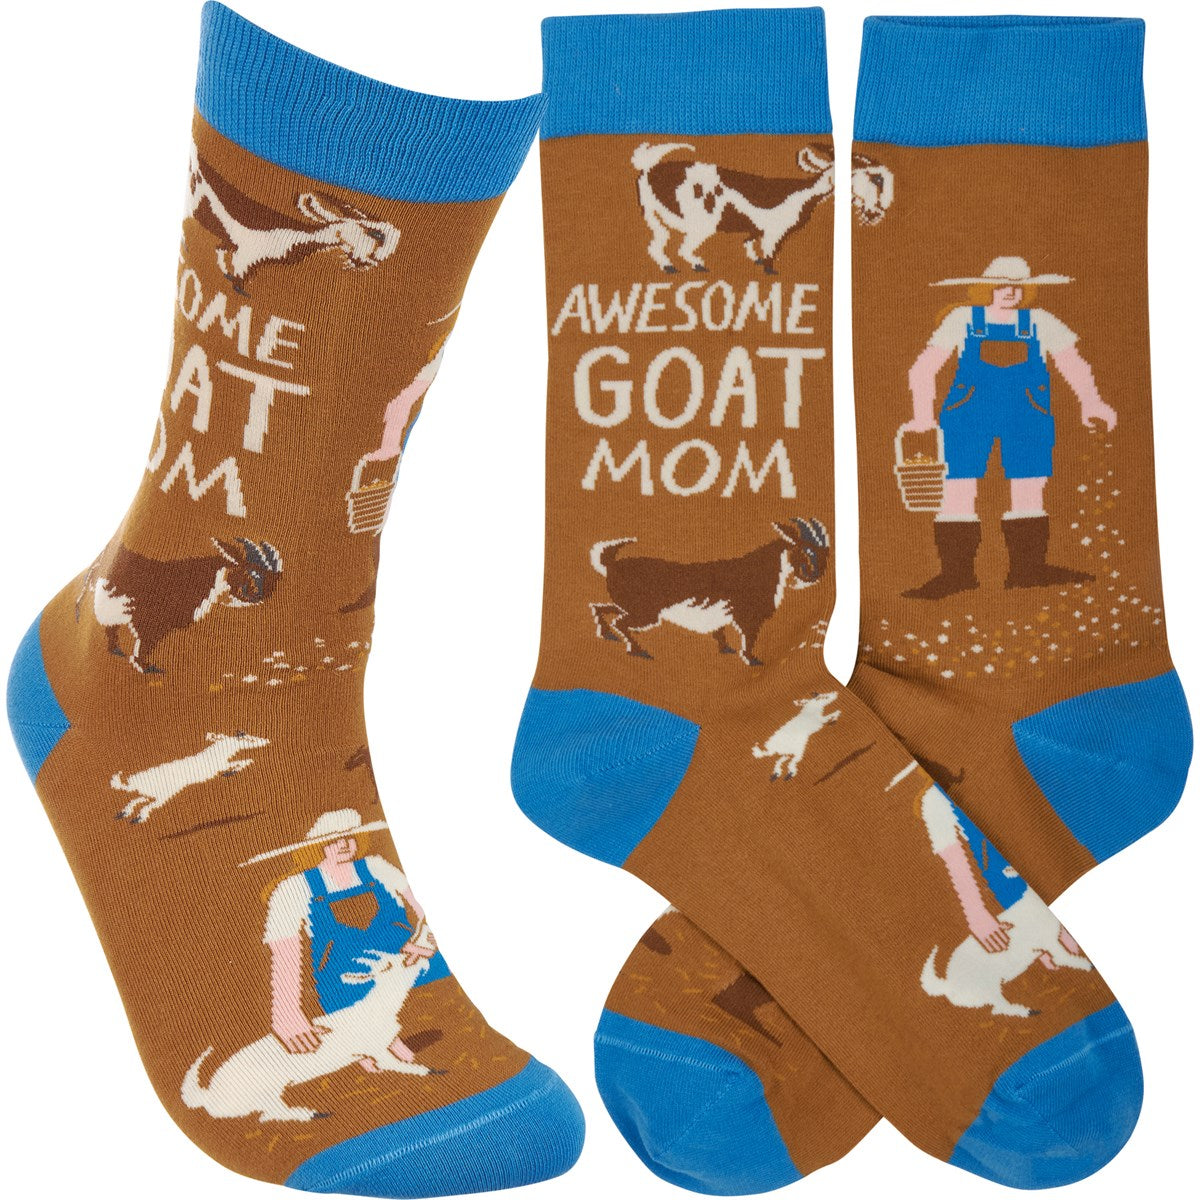 Awesome Goat Mom Fun Novelty Socks